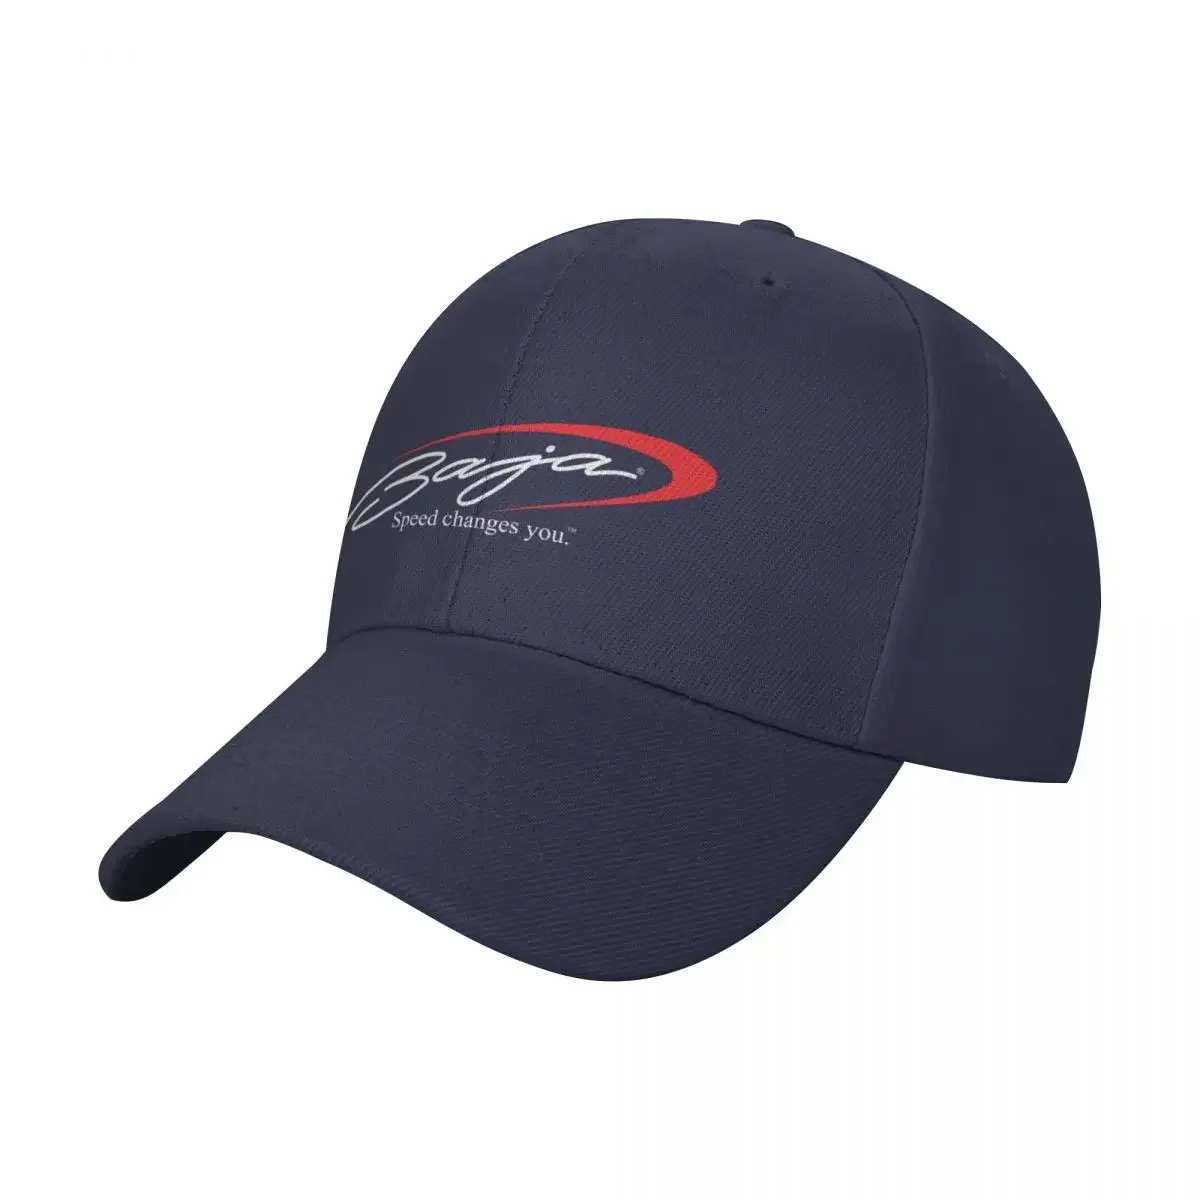 

BAJA BOATS Cap baseball cap new hat Visor baseball hat women's beach visor Men's